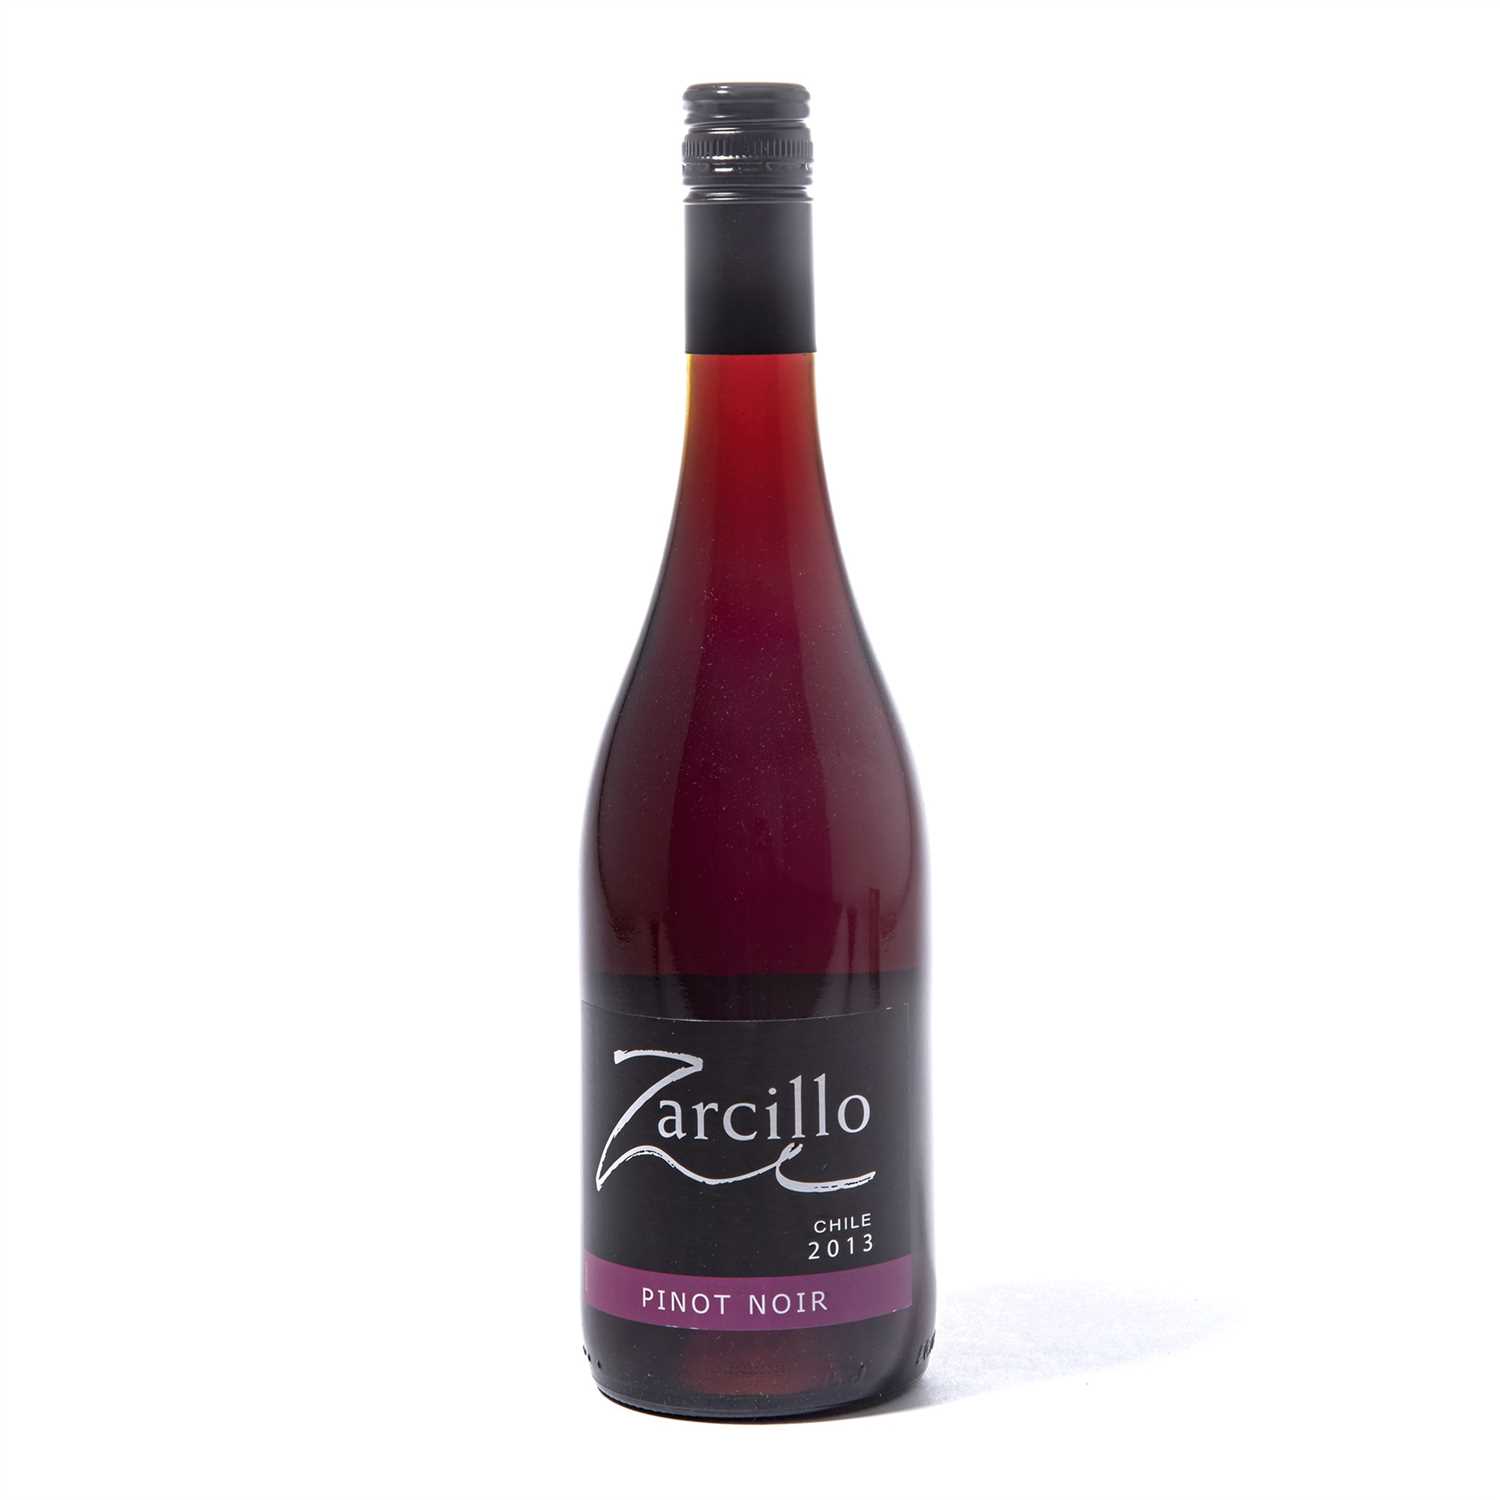 Lot 185 - 2013 Zarcillo Pinot Noir